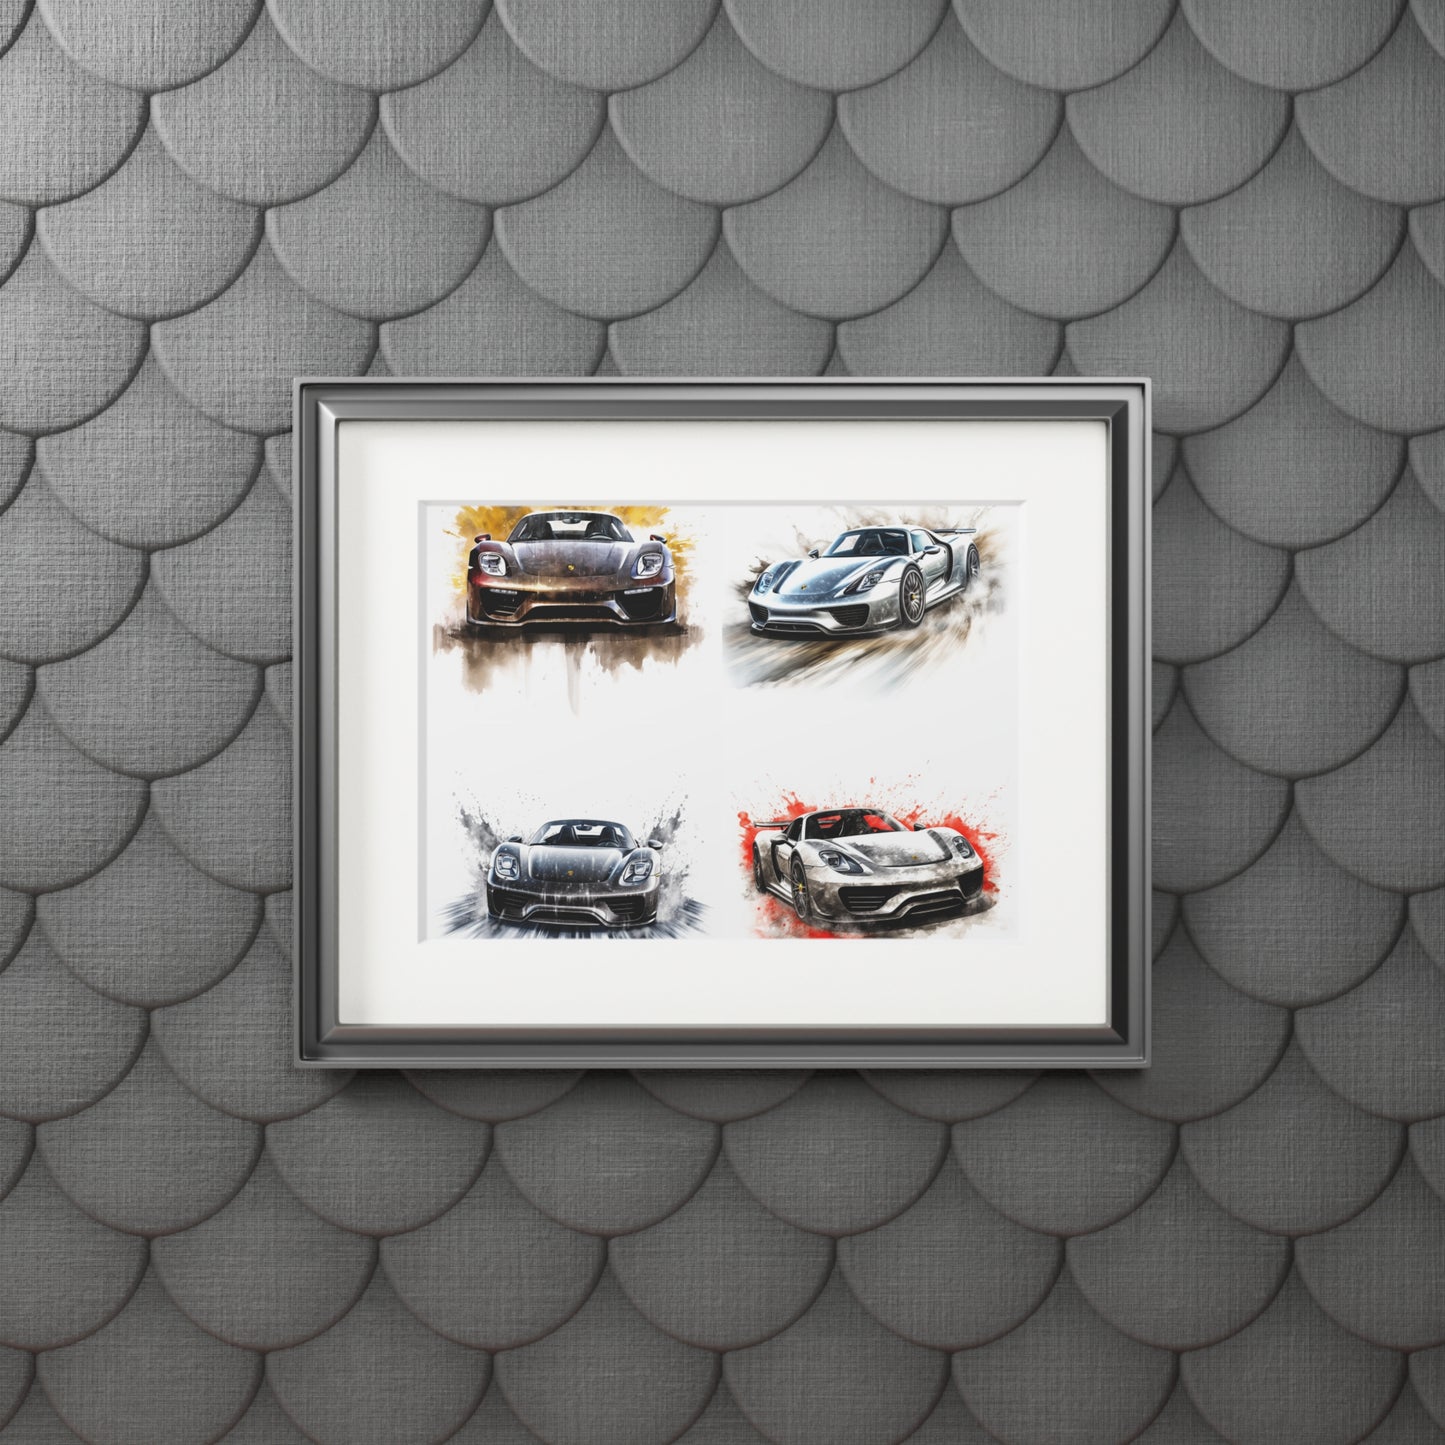 Fine Art Prints (Passepartout Paper Frame) 918 Spyder white background driving fast with water splashing 5